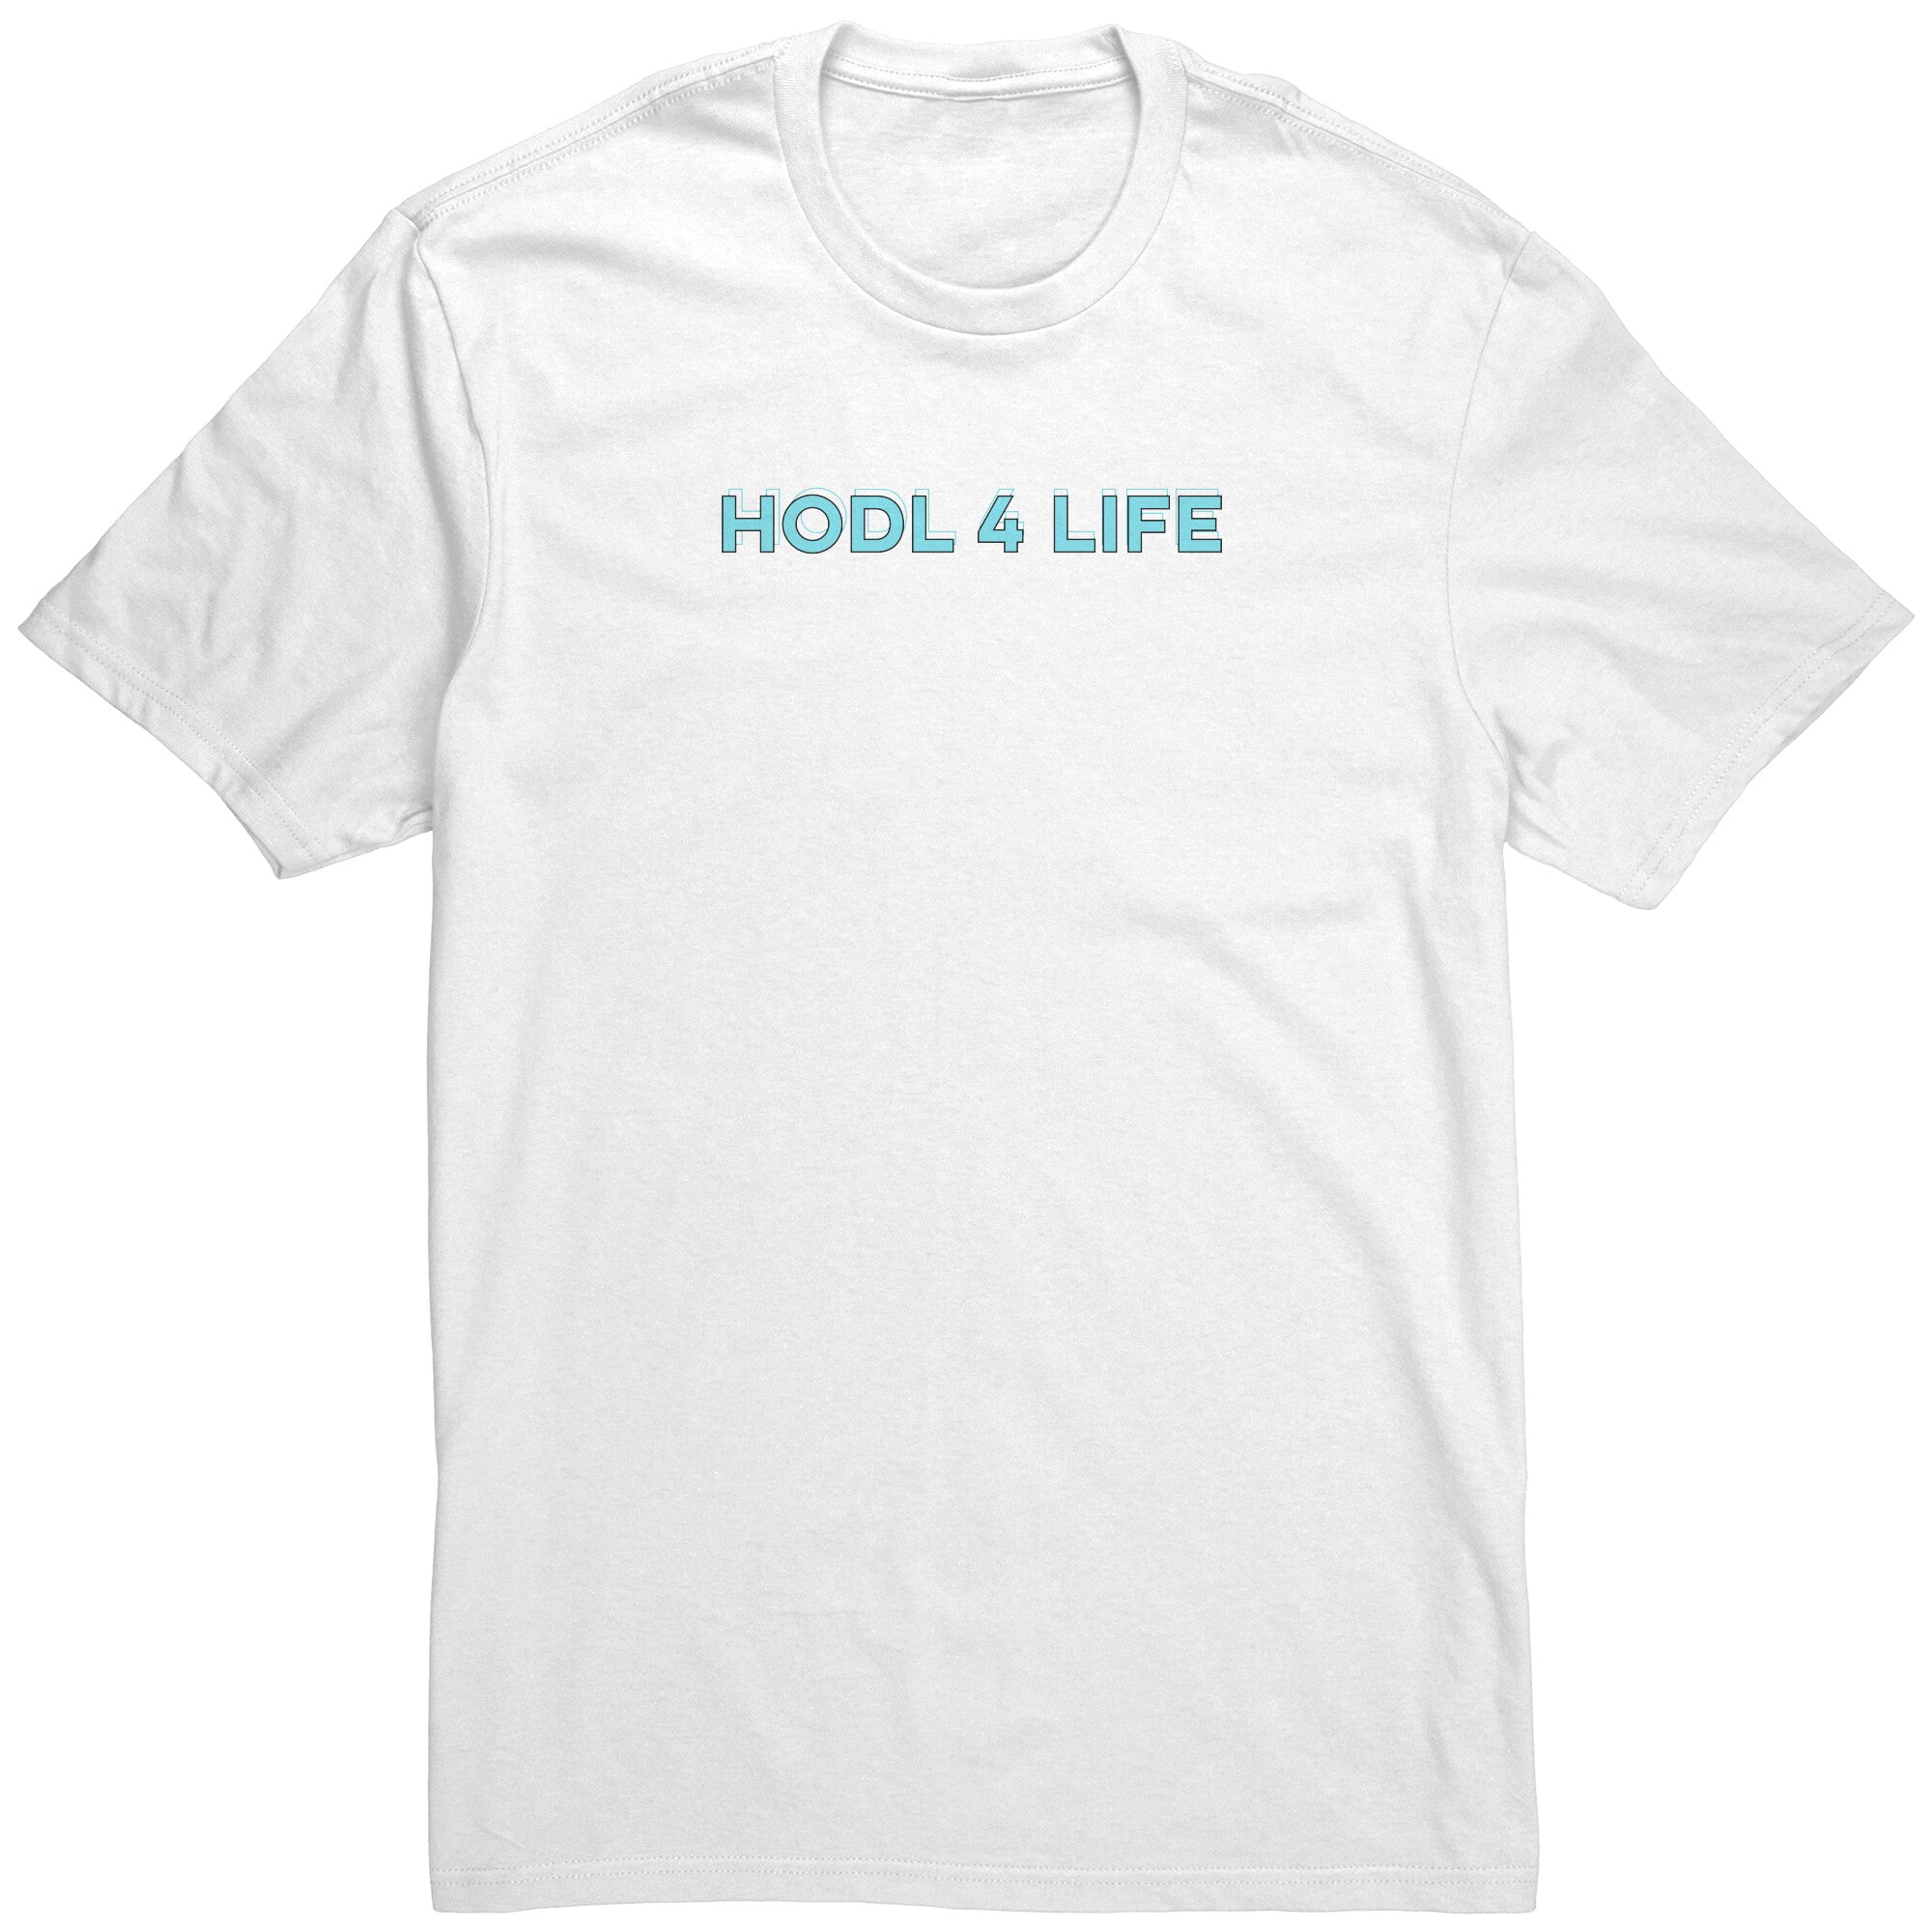 "HODL 4 LIFE" Adult T-shirt